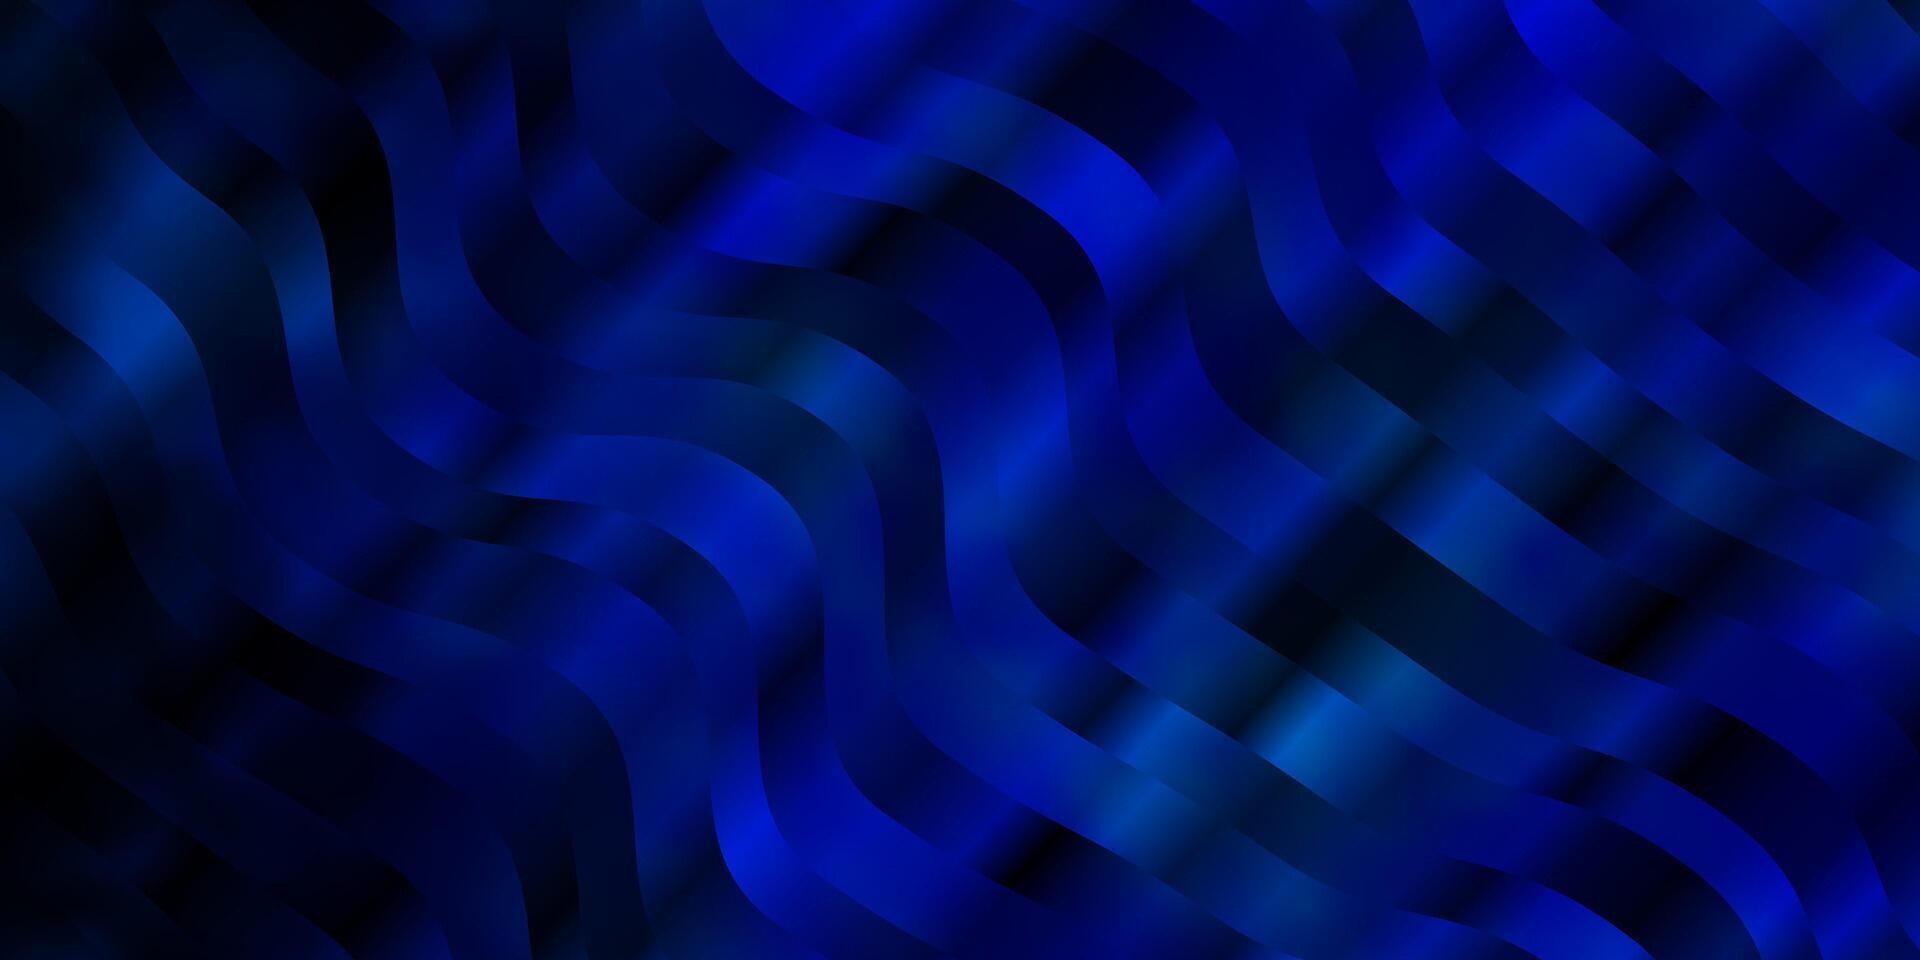 texture de vecteur bleu clair avec arc circulaire.